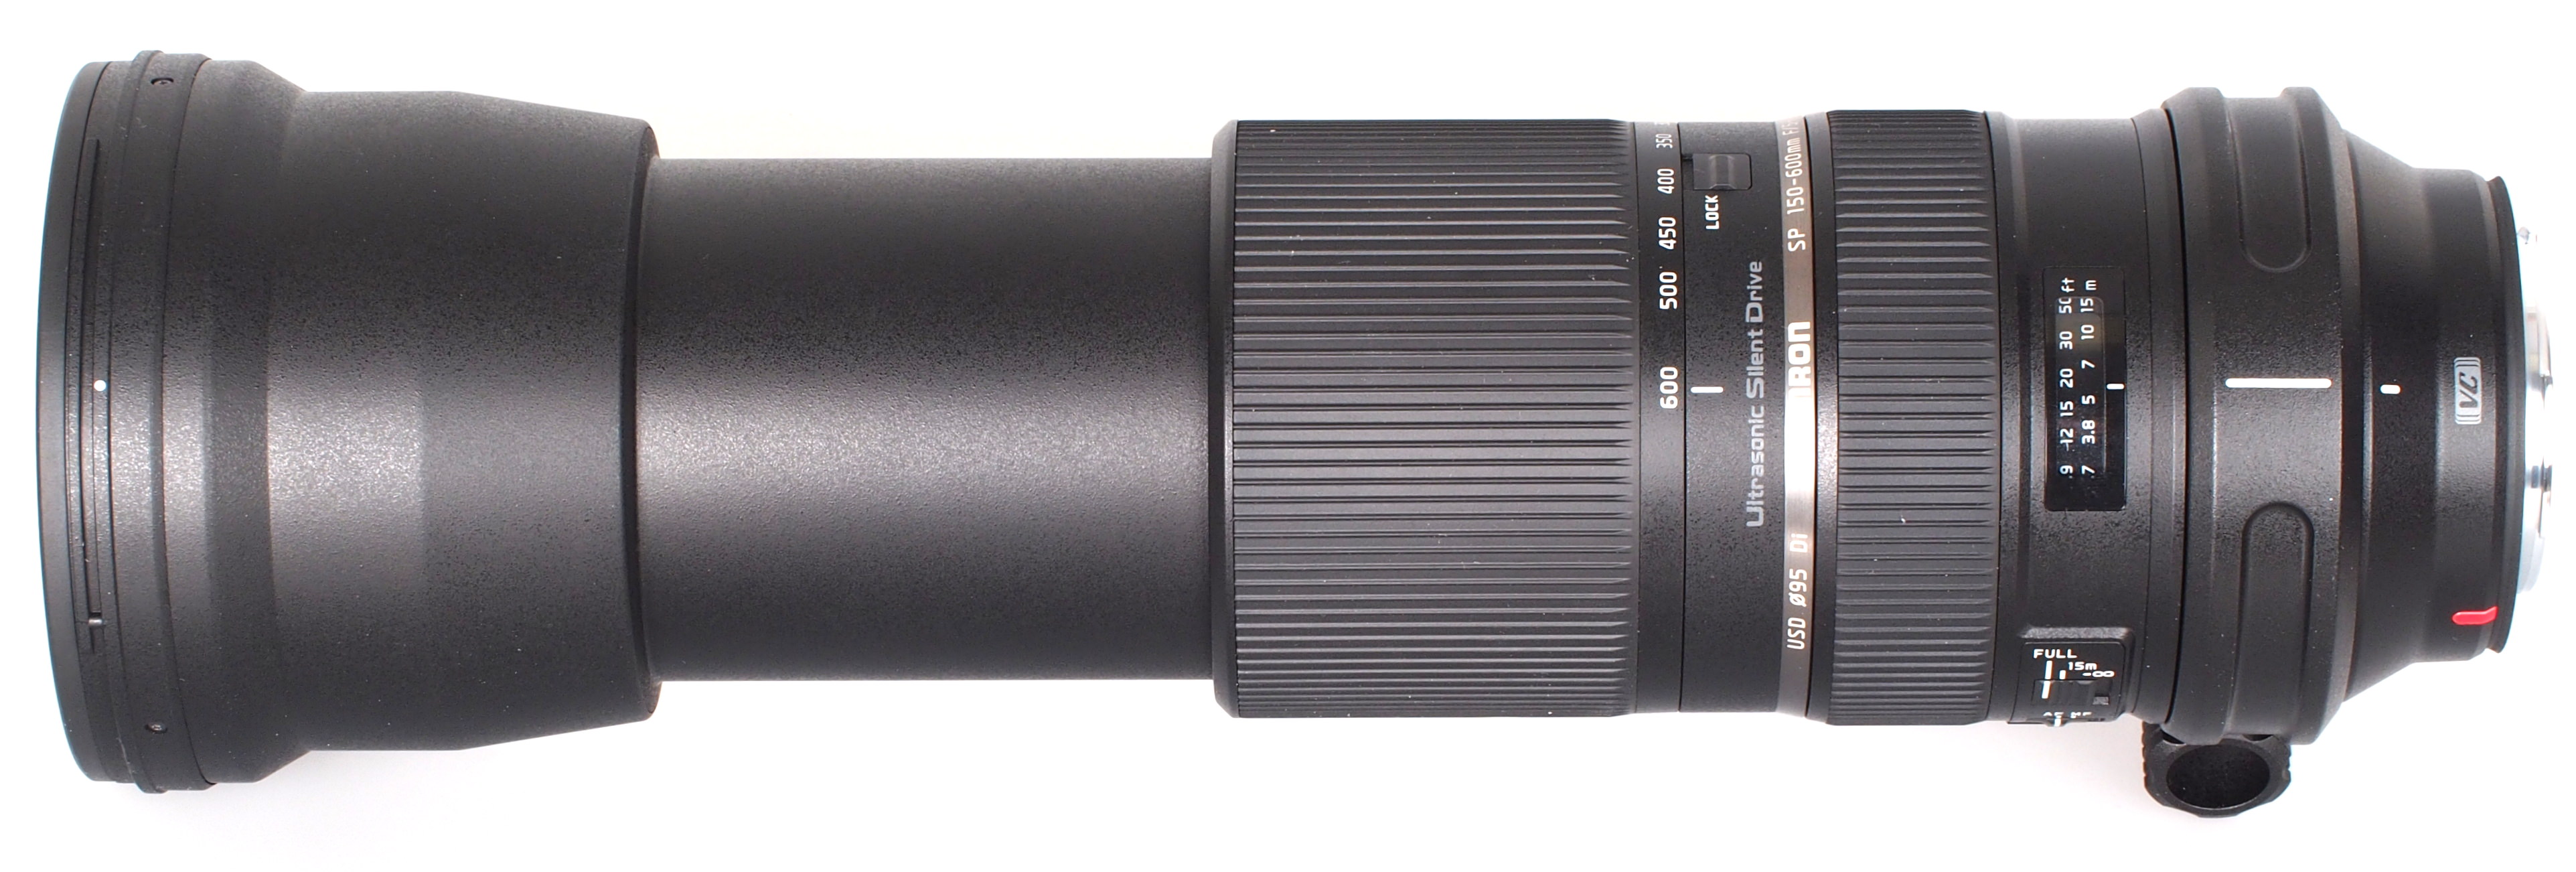 Tamron SP 150-600mm f/5-6.3 Di VC USD Lens Review